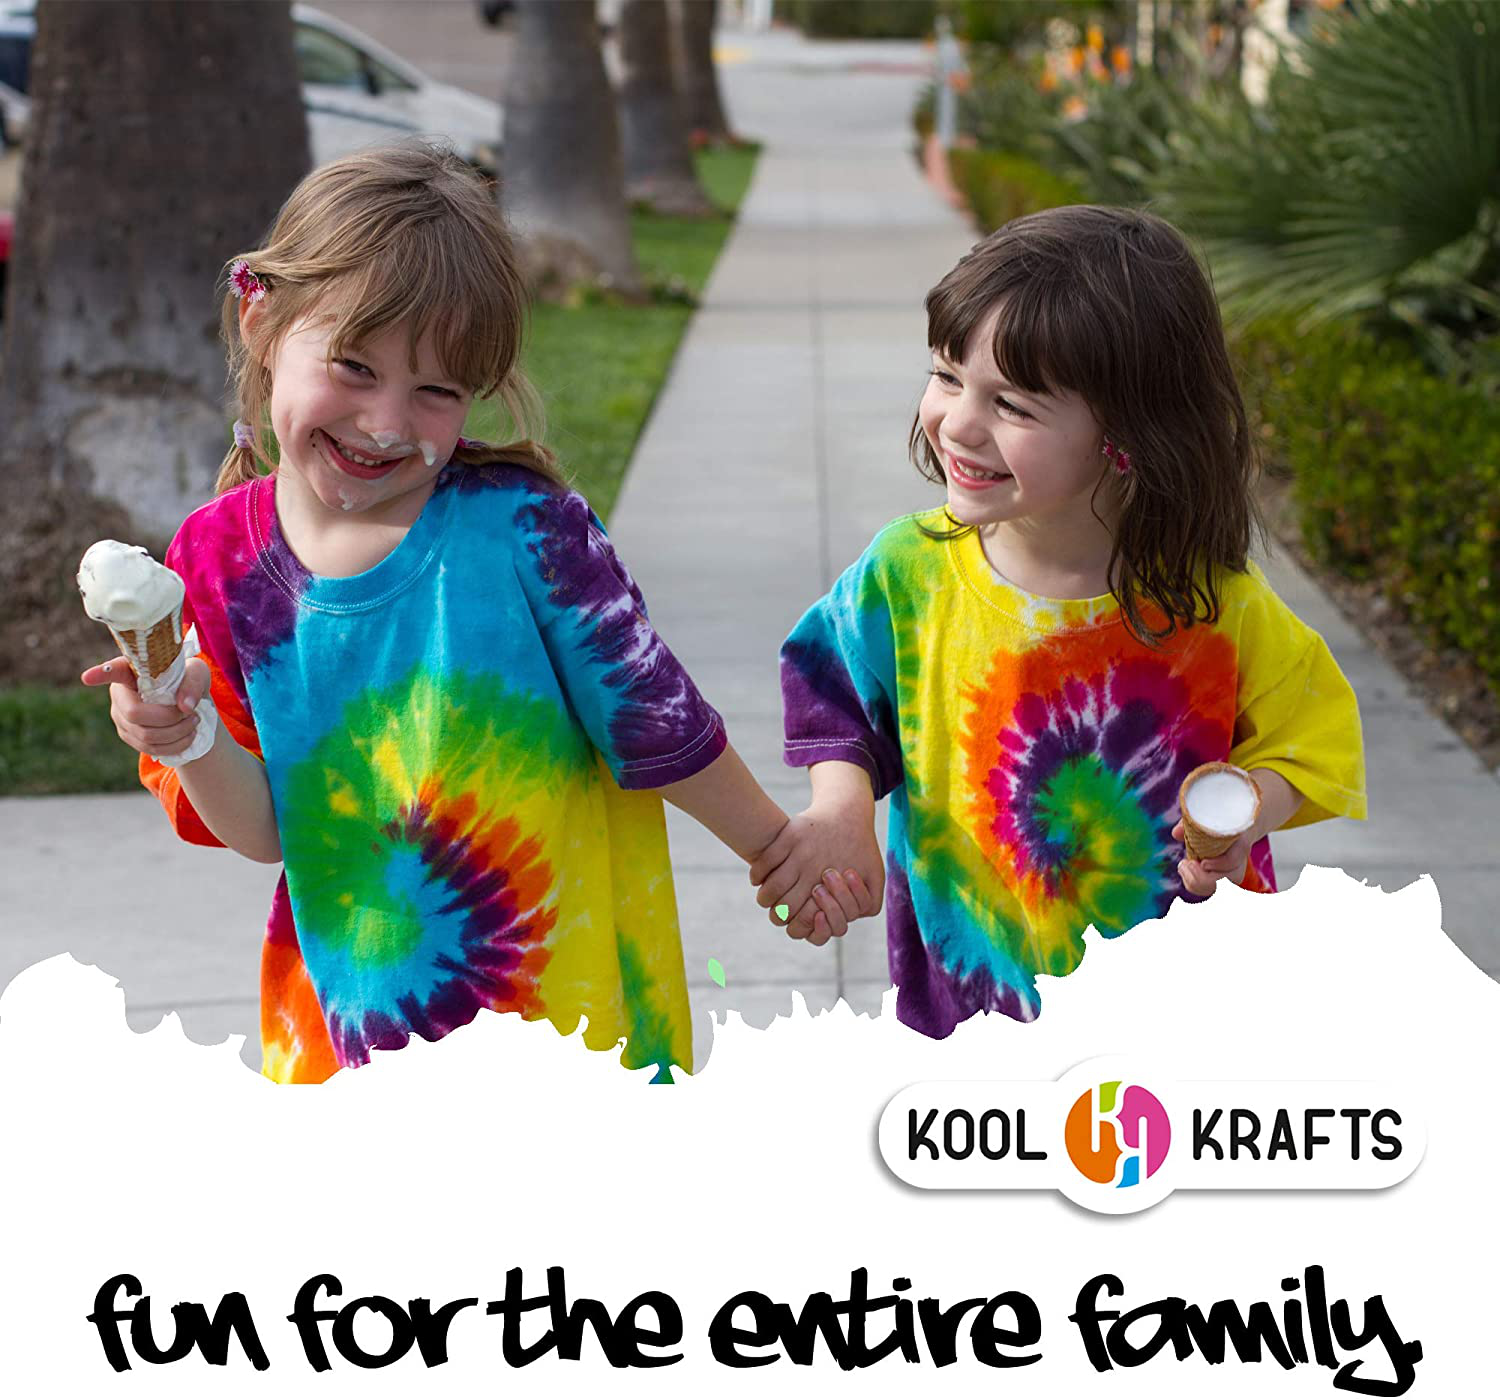 Tie Dye Kit - Tie Dye Kits for Kids - Includes 4 White T-Shirt - 12 Large Colors Tie Dye - Tie Dye Kits for Adults